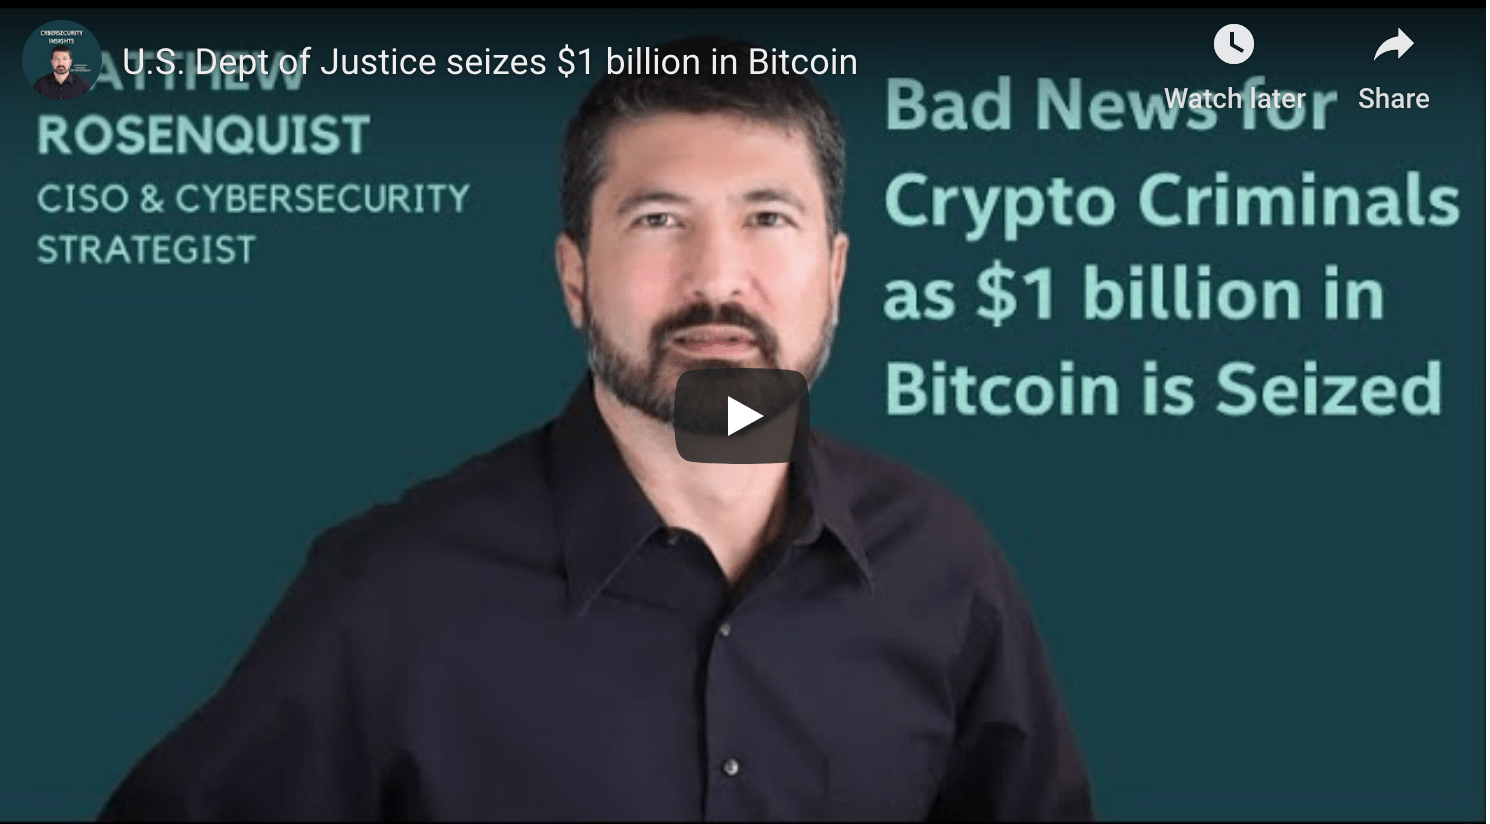 U.S._Dept_of_Justice_seizes_1_billion_in_Bitcoin.png